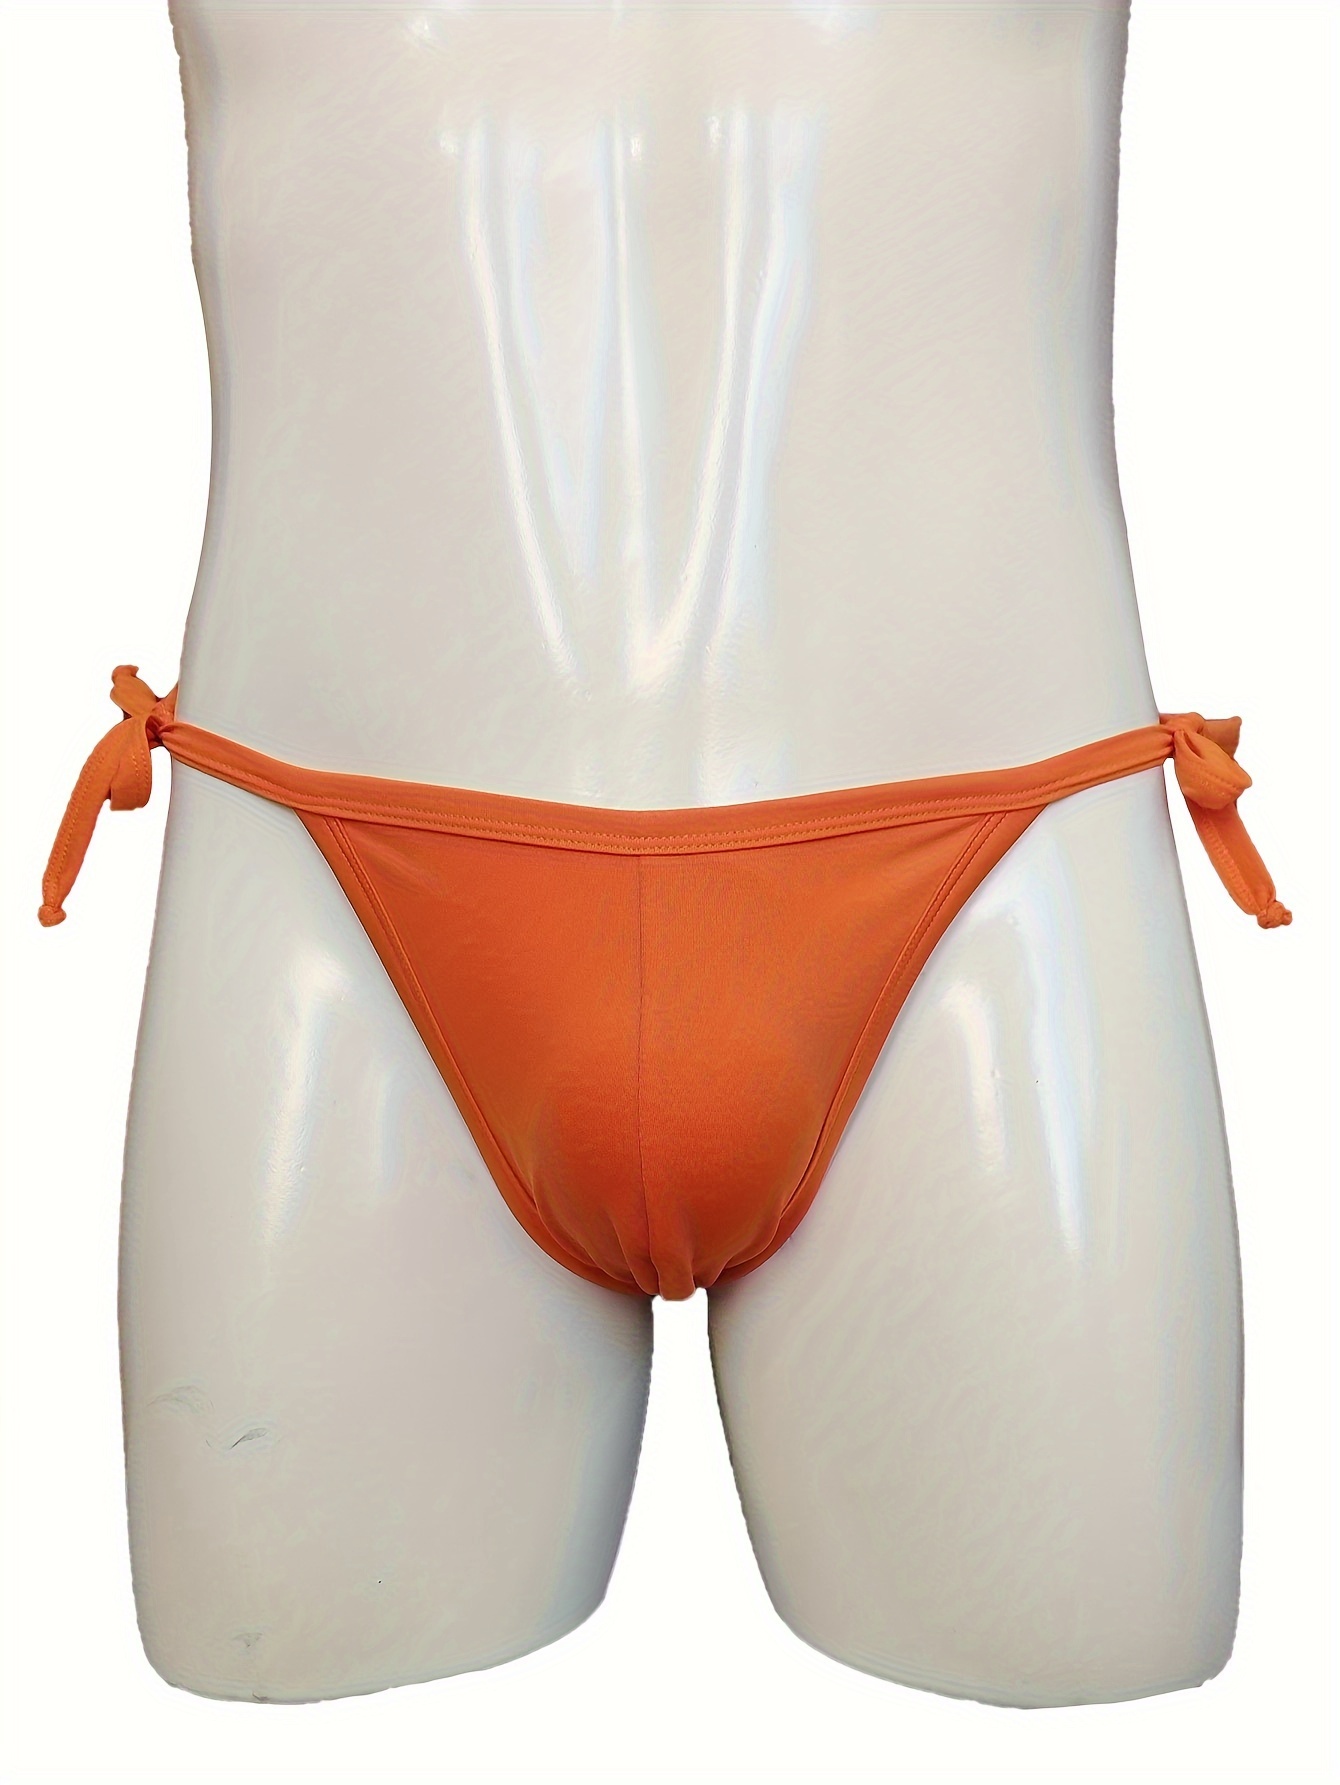 Bañador bikini tanga con abertura trasera, Mode de Mujer